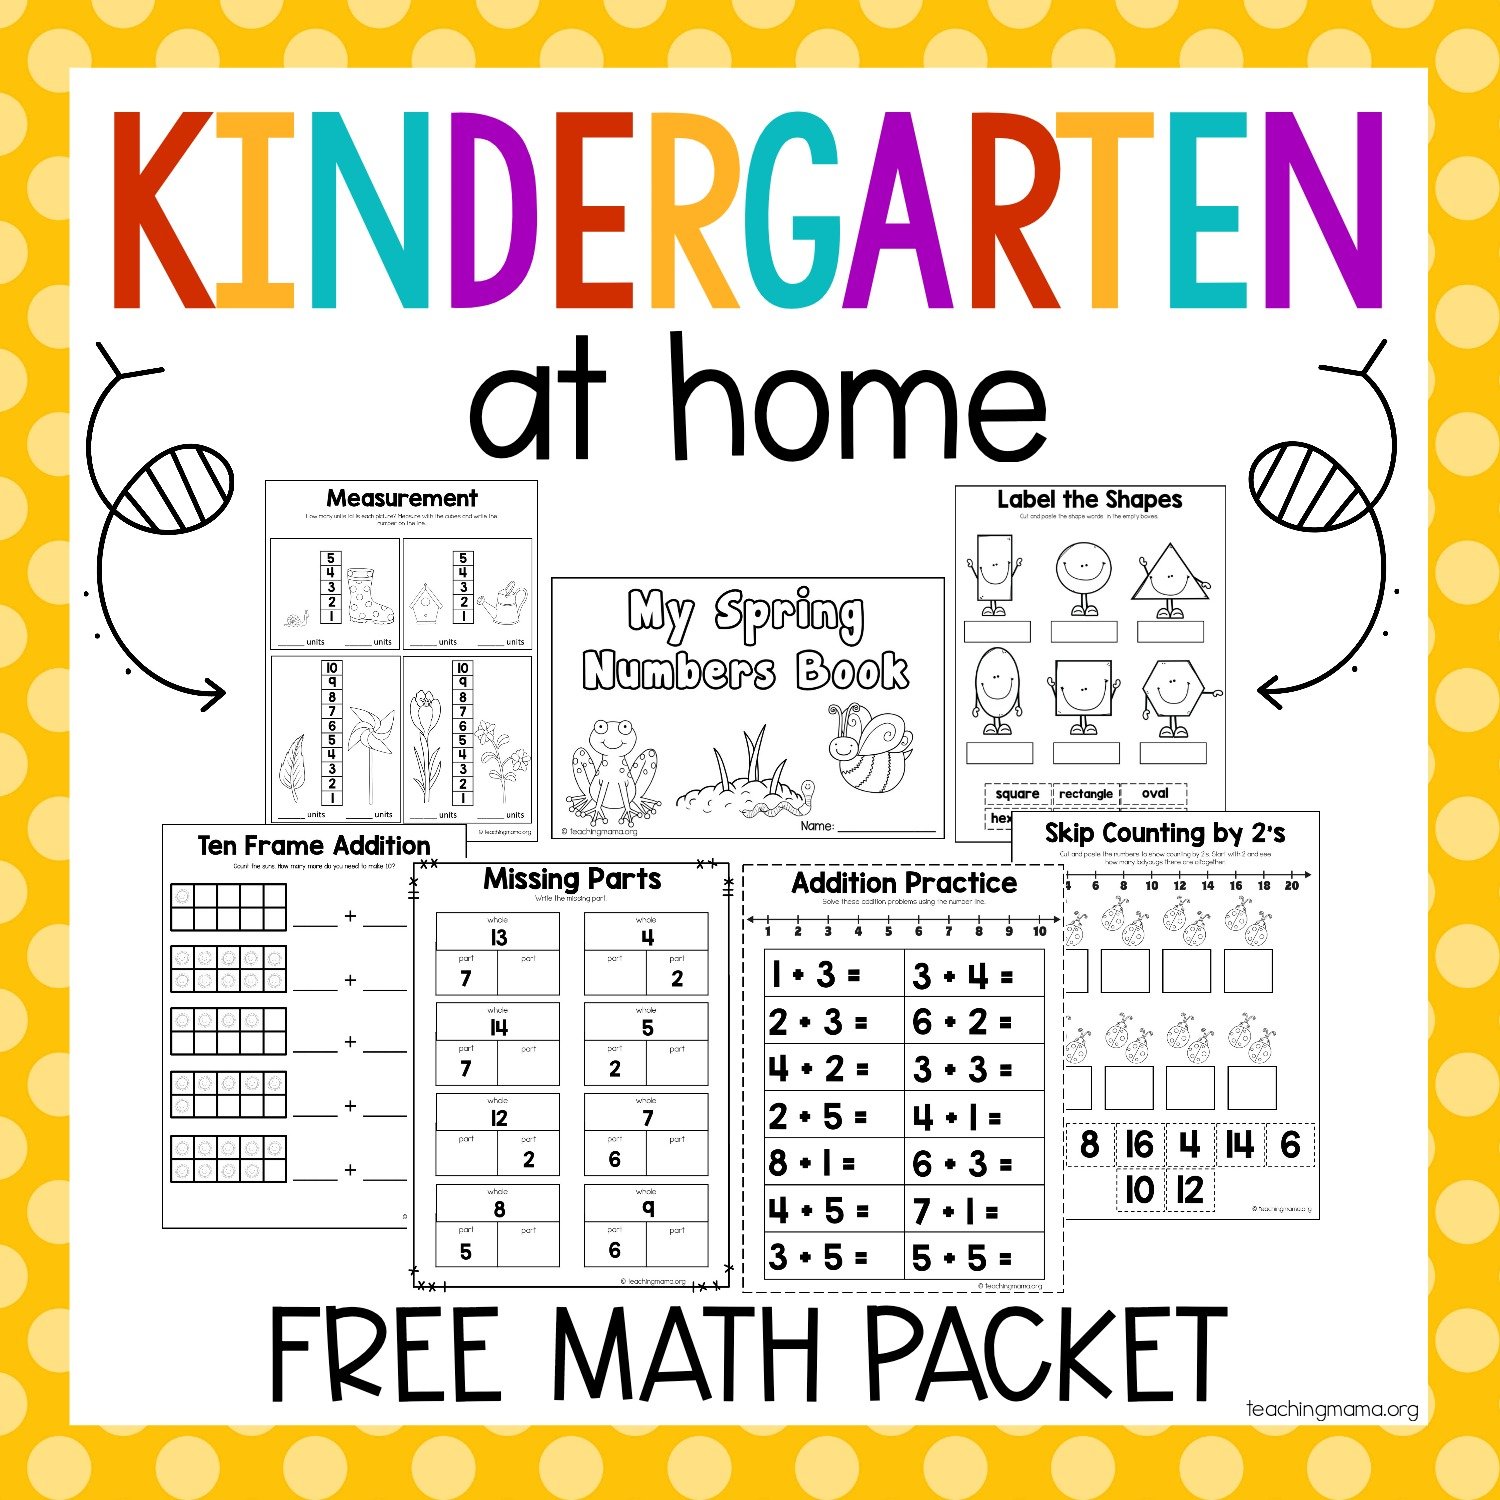 homework packets for kindergarten